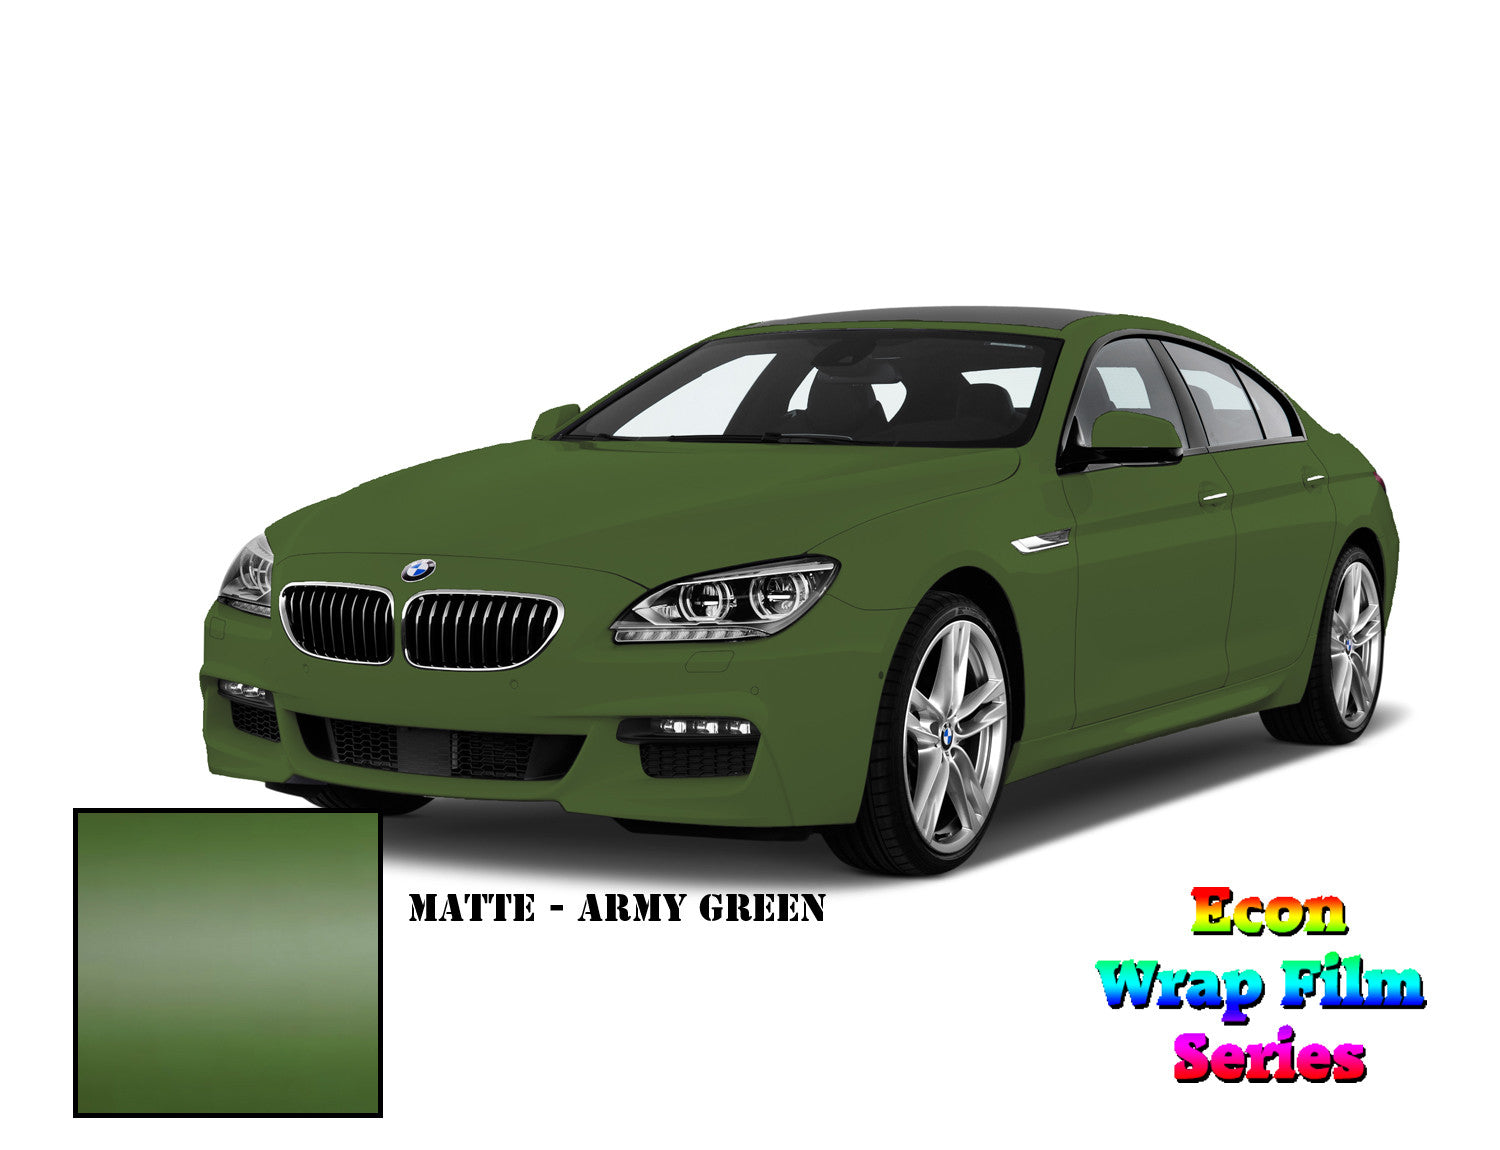 Econ Wrap Film Series - Matte Army Green - Hachi Auto